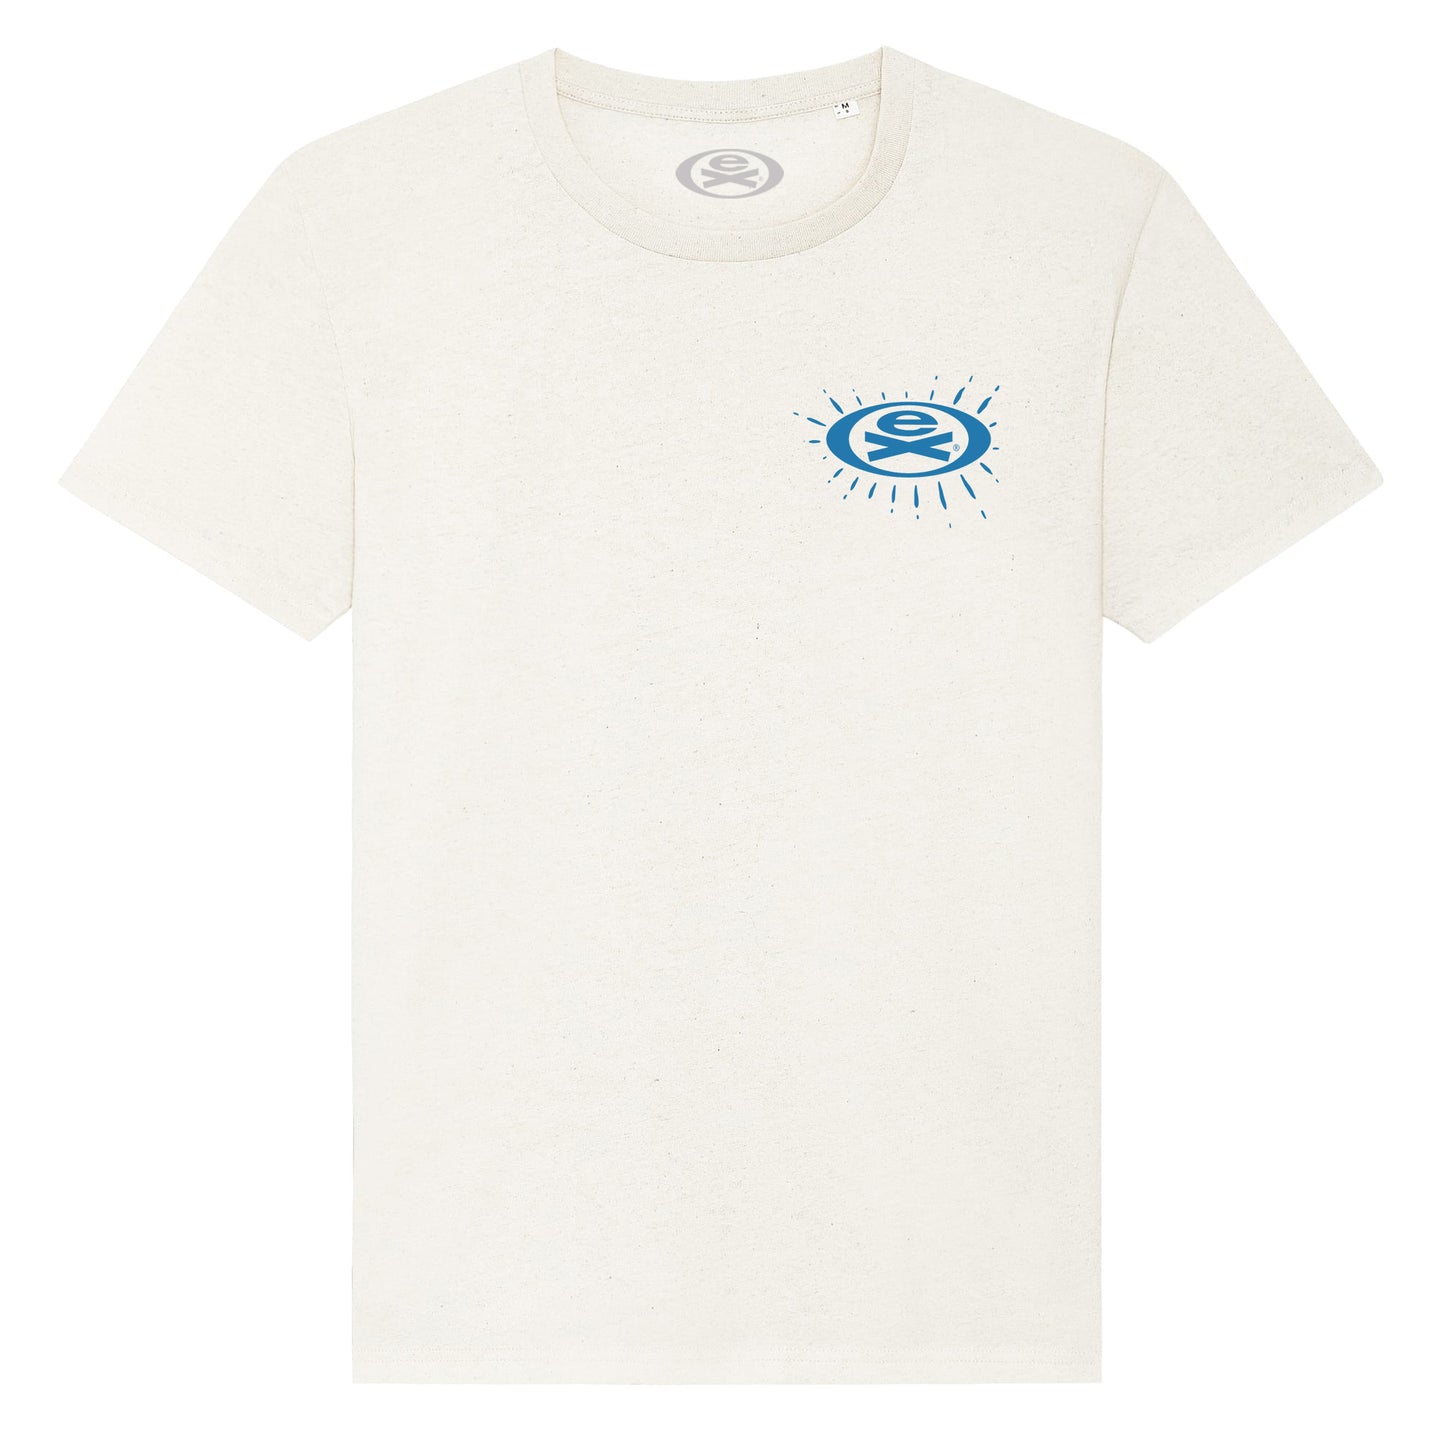 EX Surfboard Co T-Shirt - Vintage White